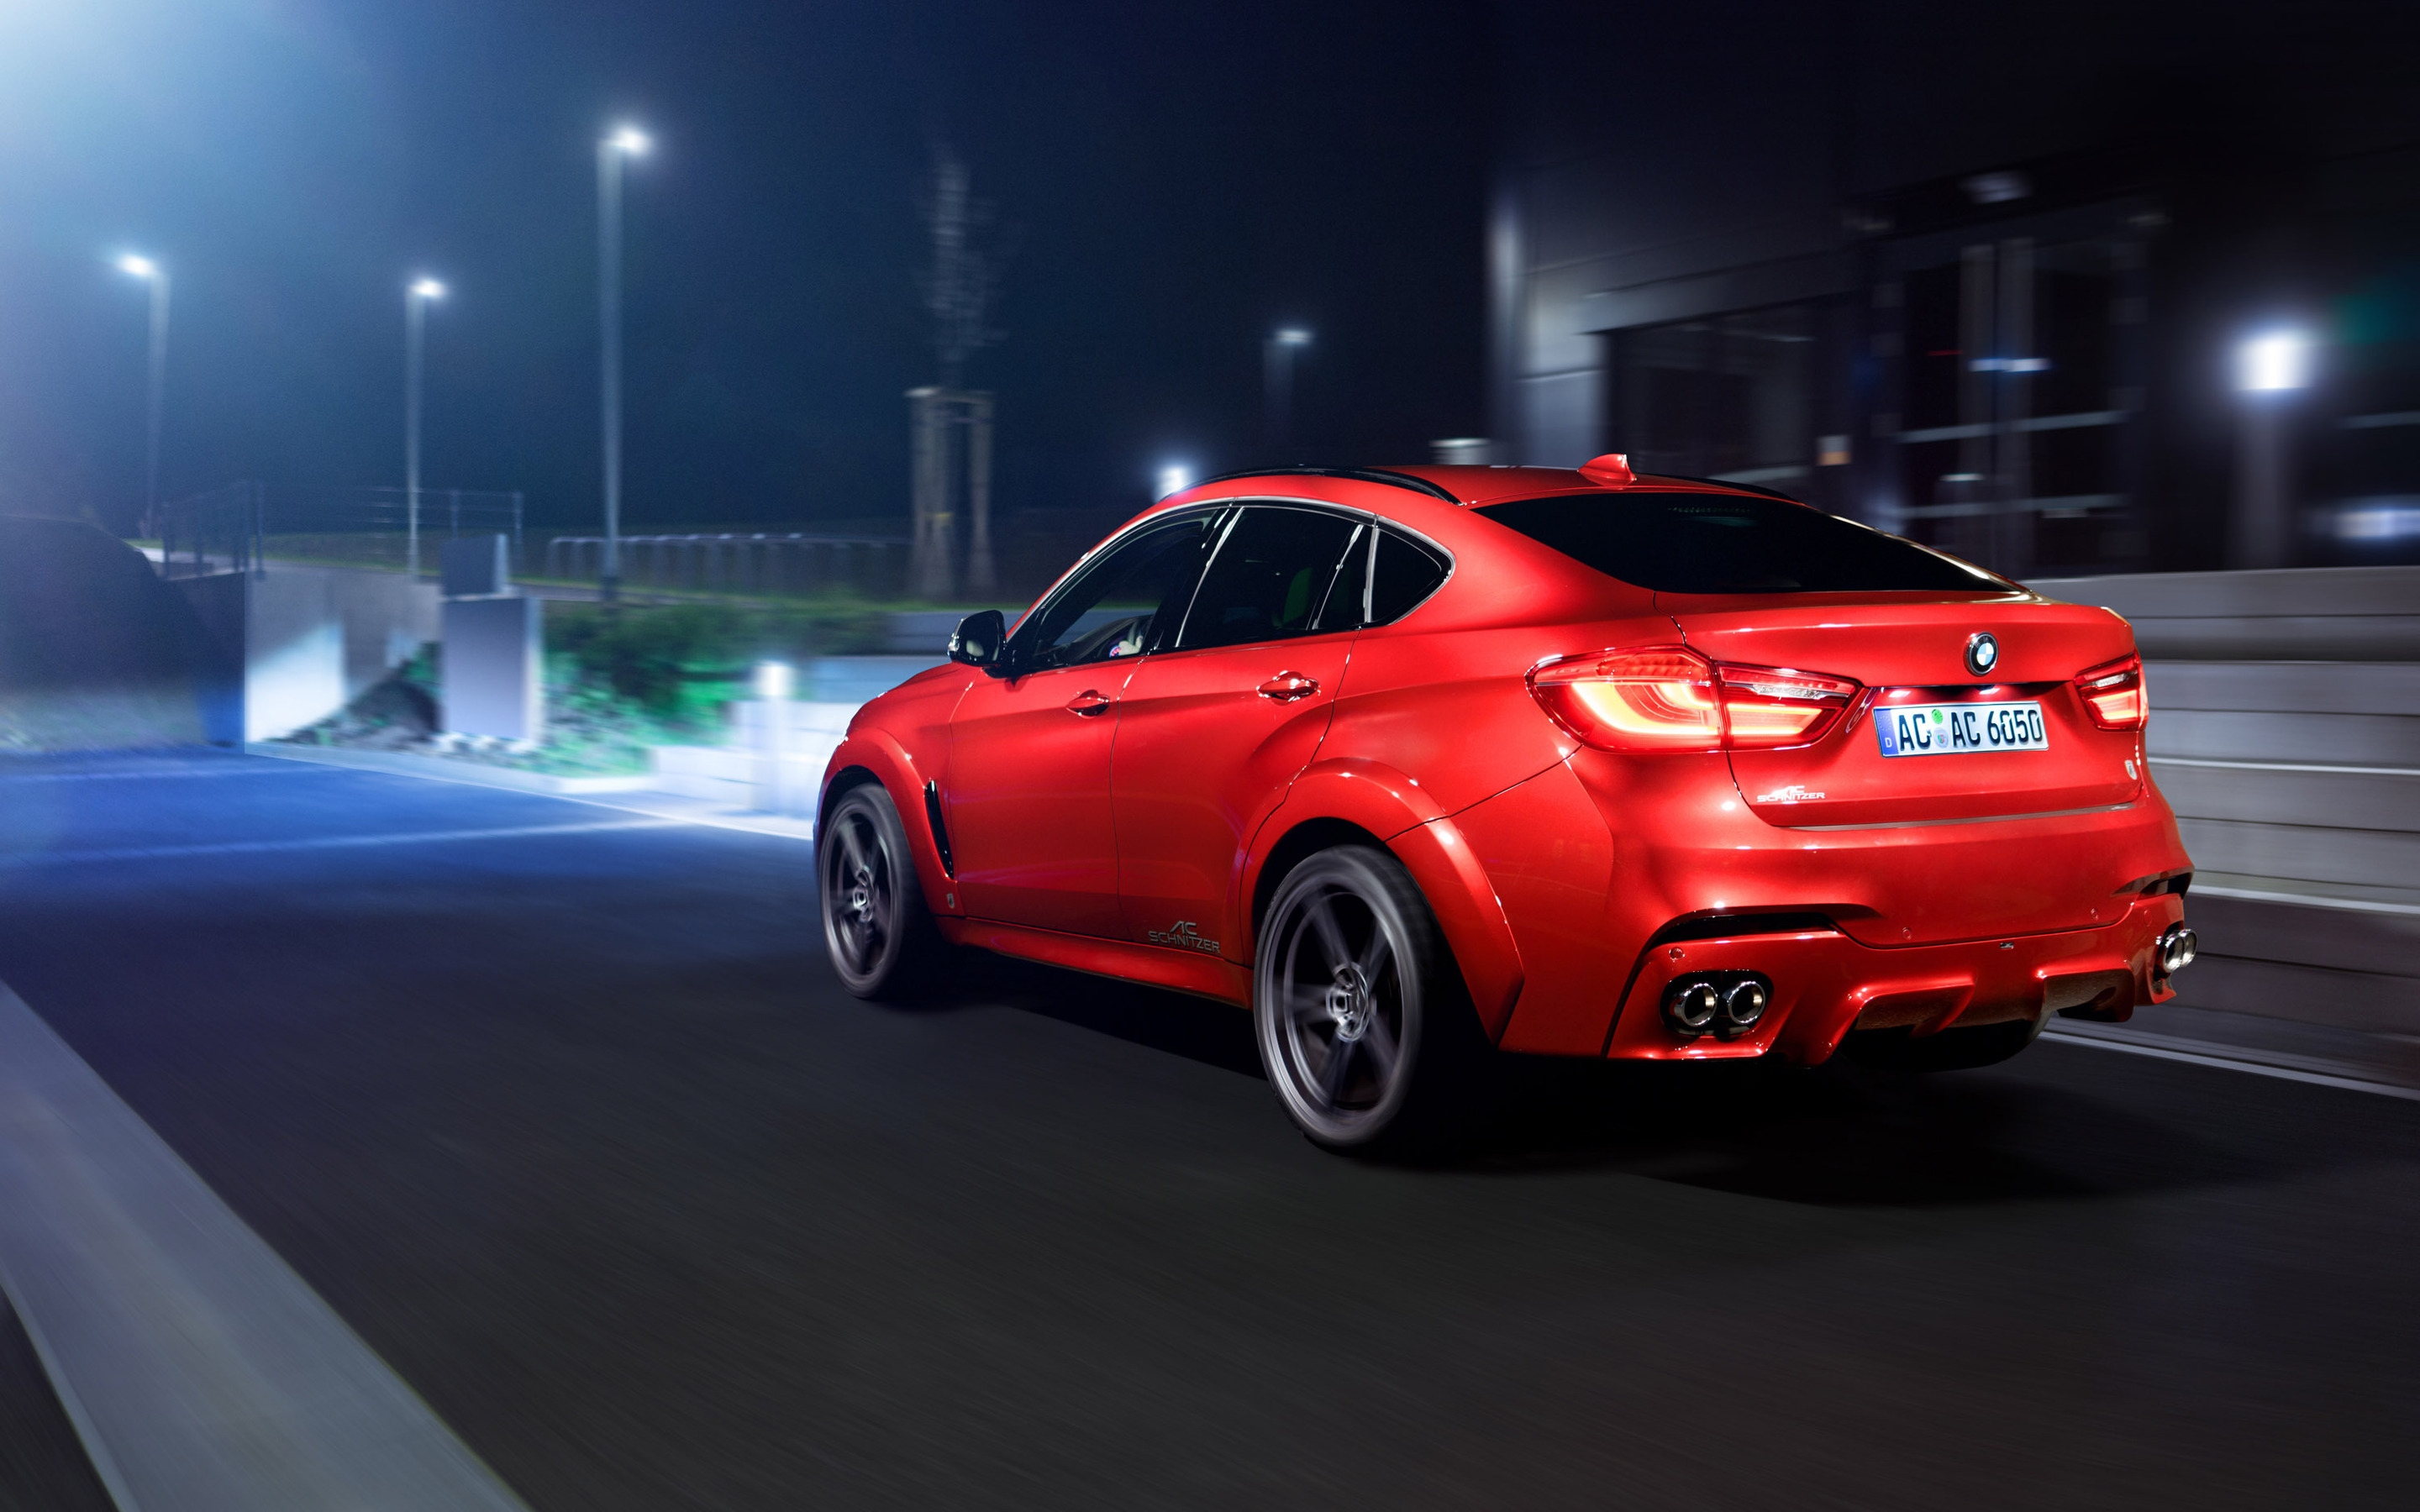 Red BMW X6 2016 for 2880 x 1800 Retina Display resolution